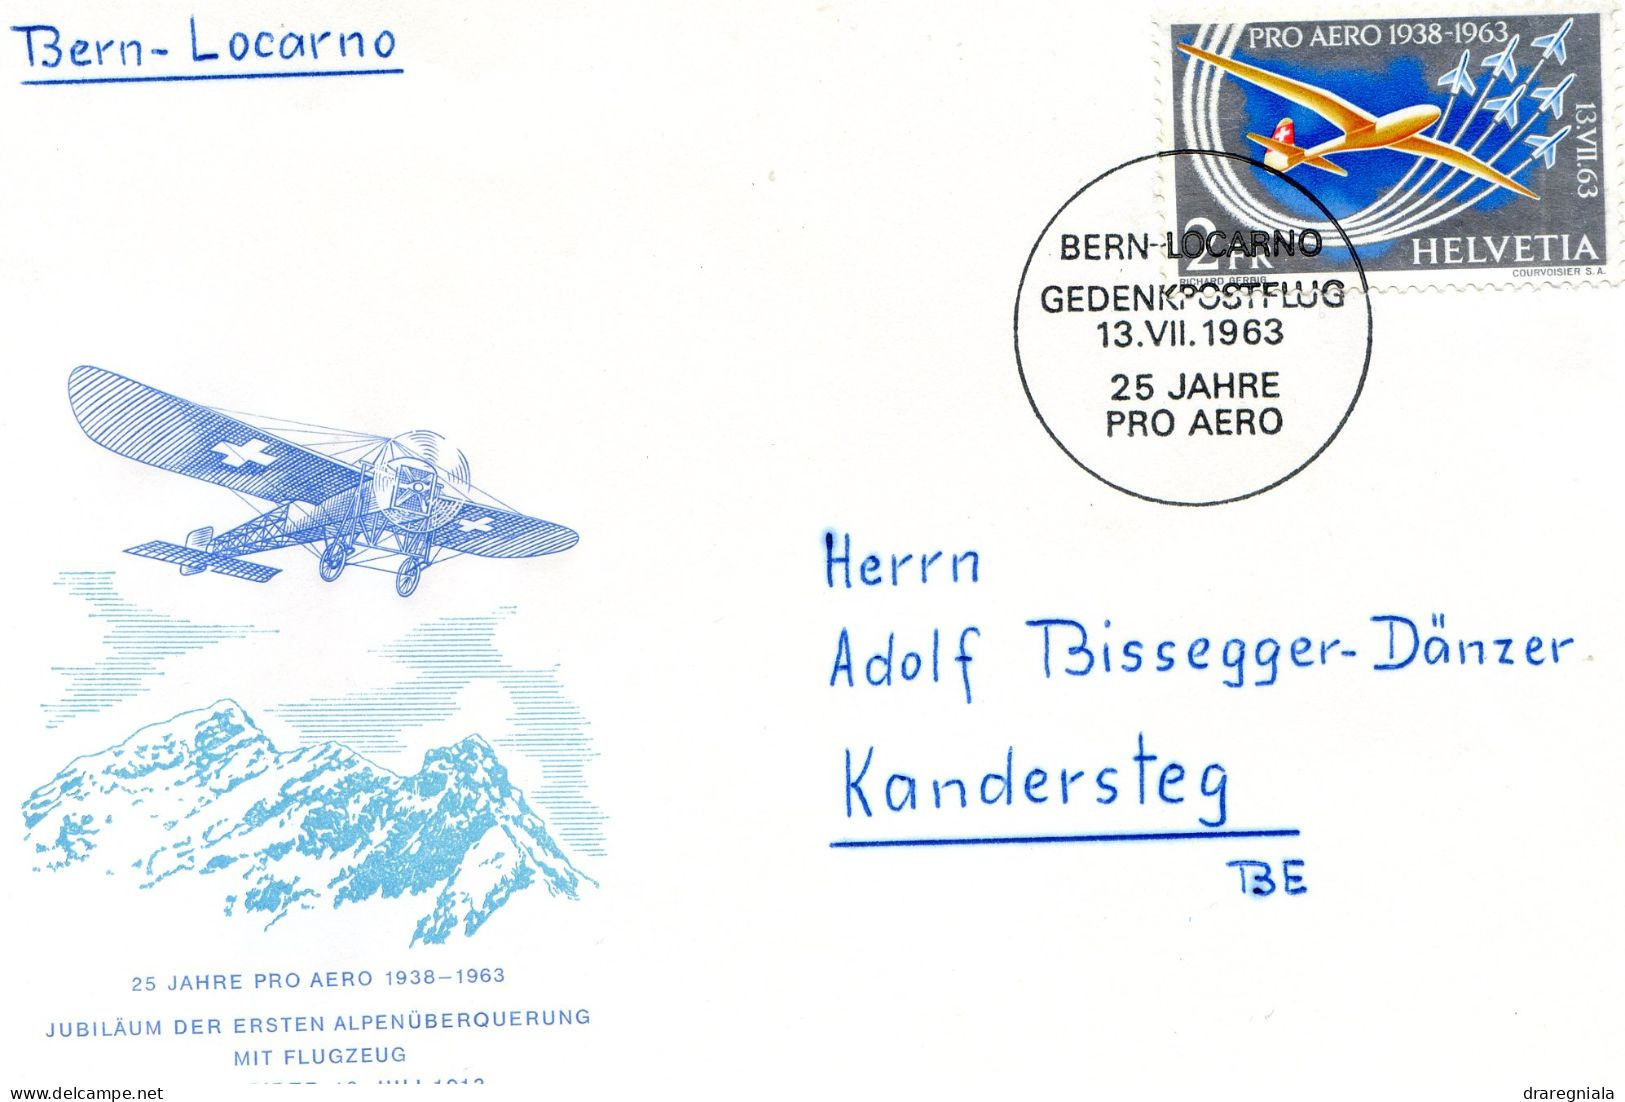 Bern - Locarno Gedenkpostflug 13 VII 1963 - 25 Jahre Pro Aero 1938 1963 - Primi Voli